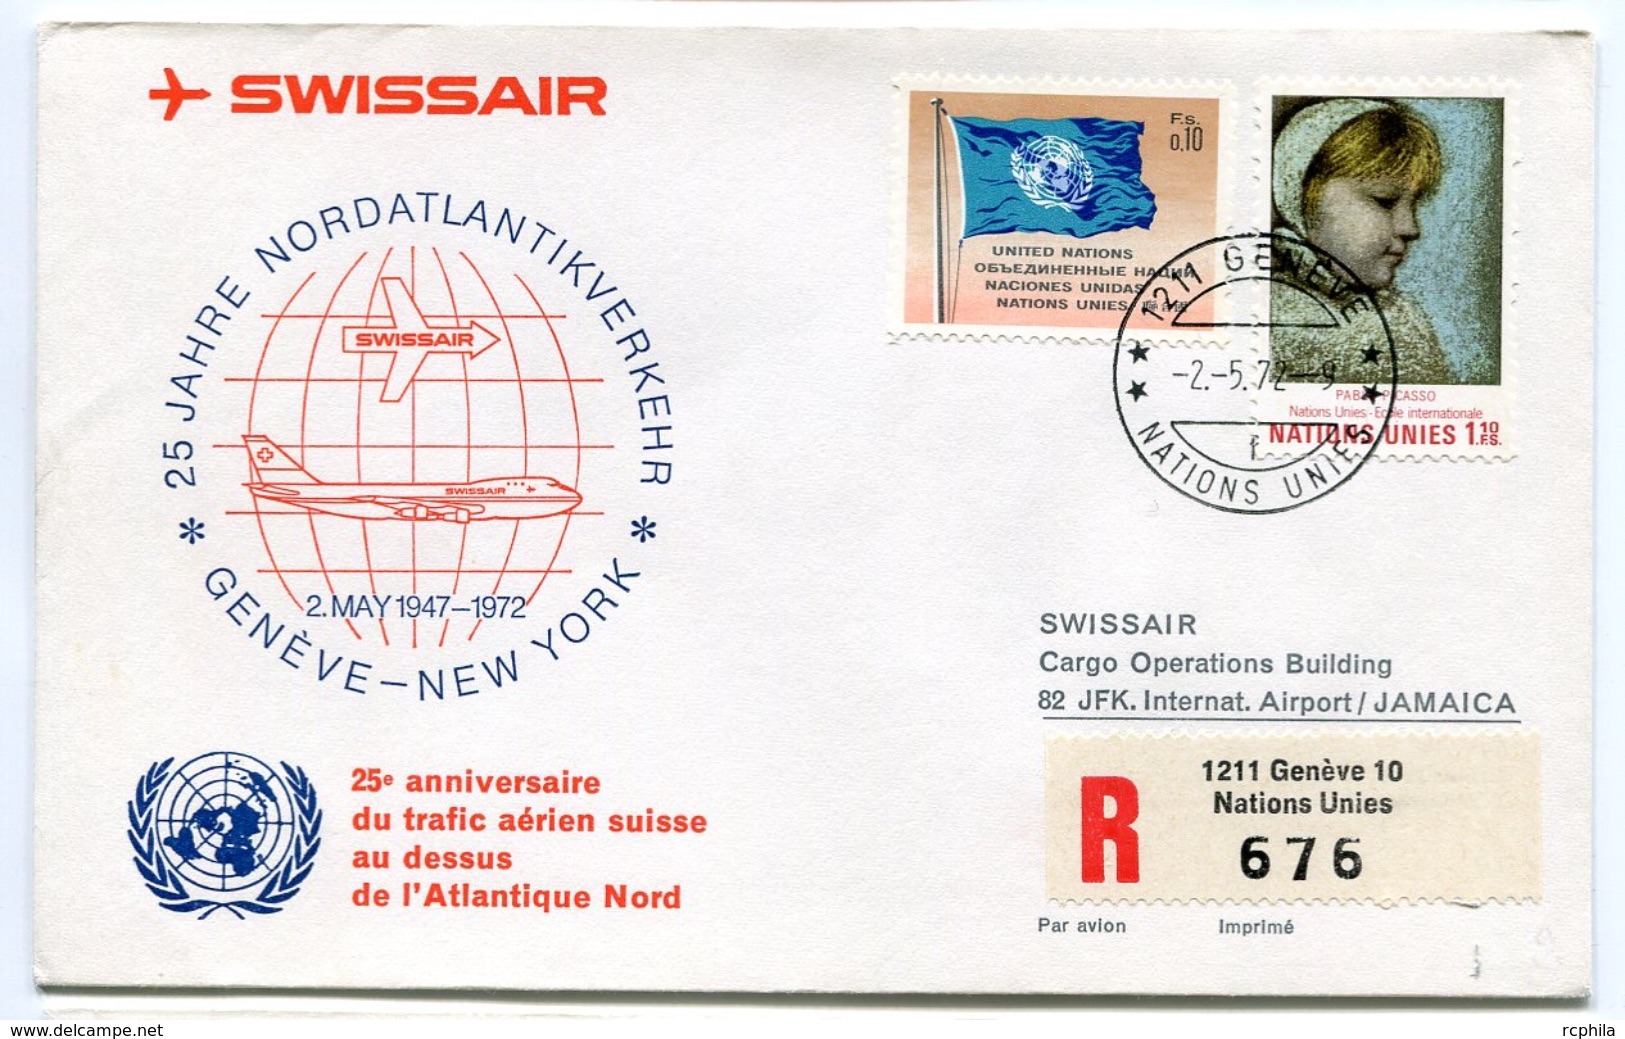 RC 6612 SUISSE SWITZERLAND 1972 1er VOL SWISSAIR GENEVE - NEW YORK USA FFC LETTRE COVER - Primi Voli